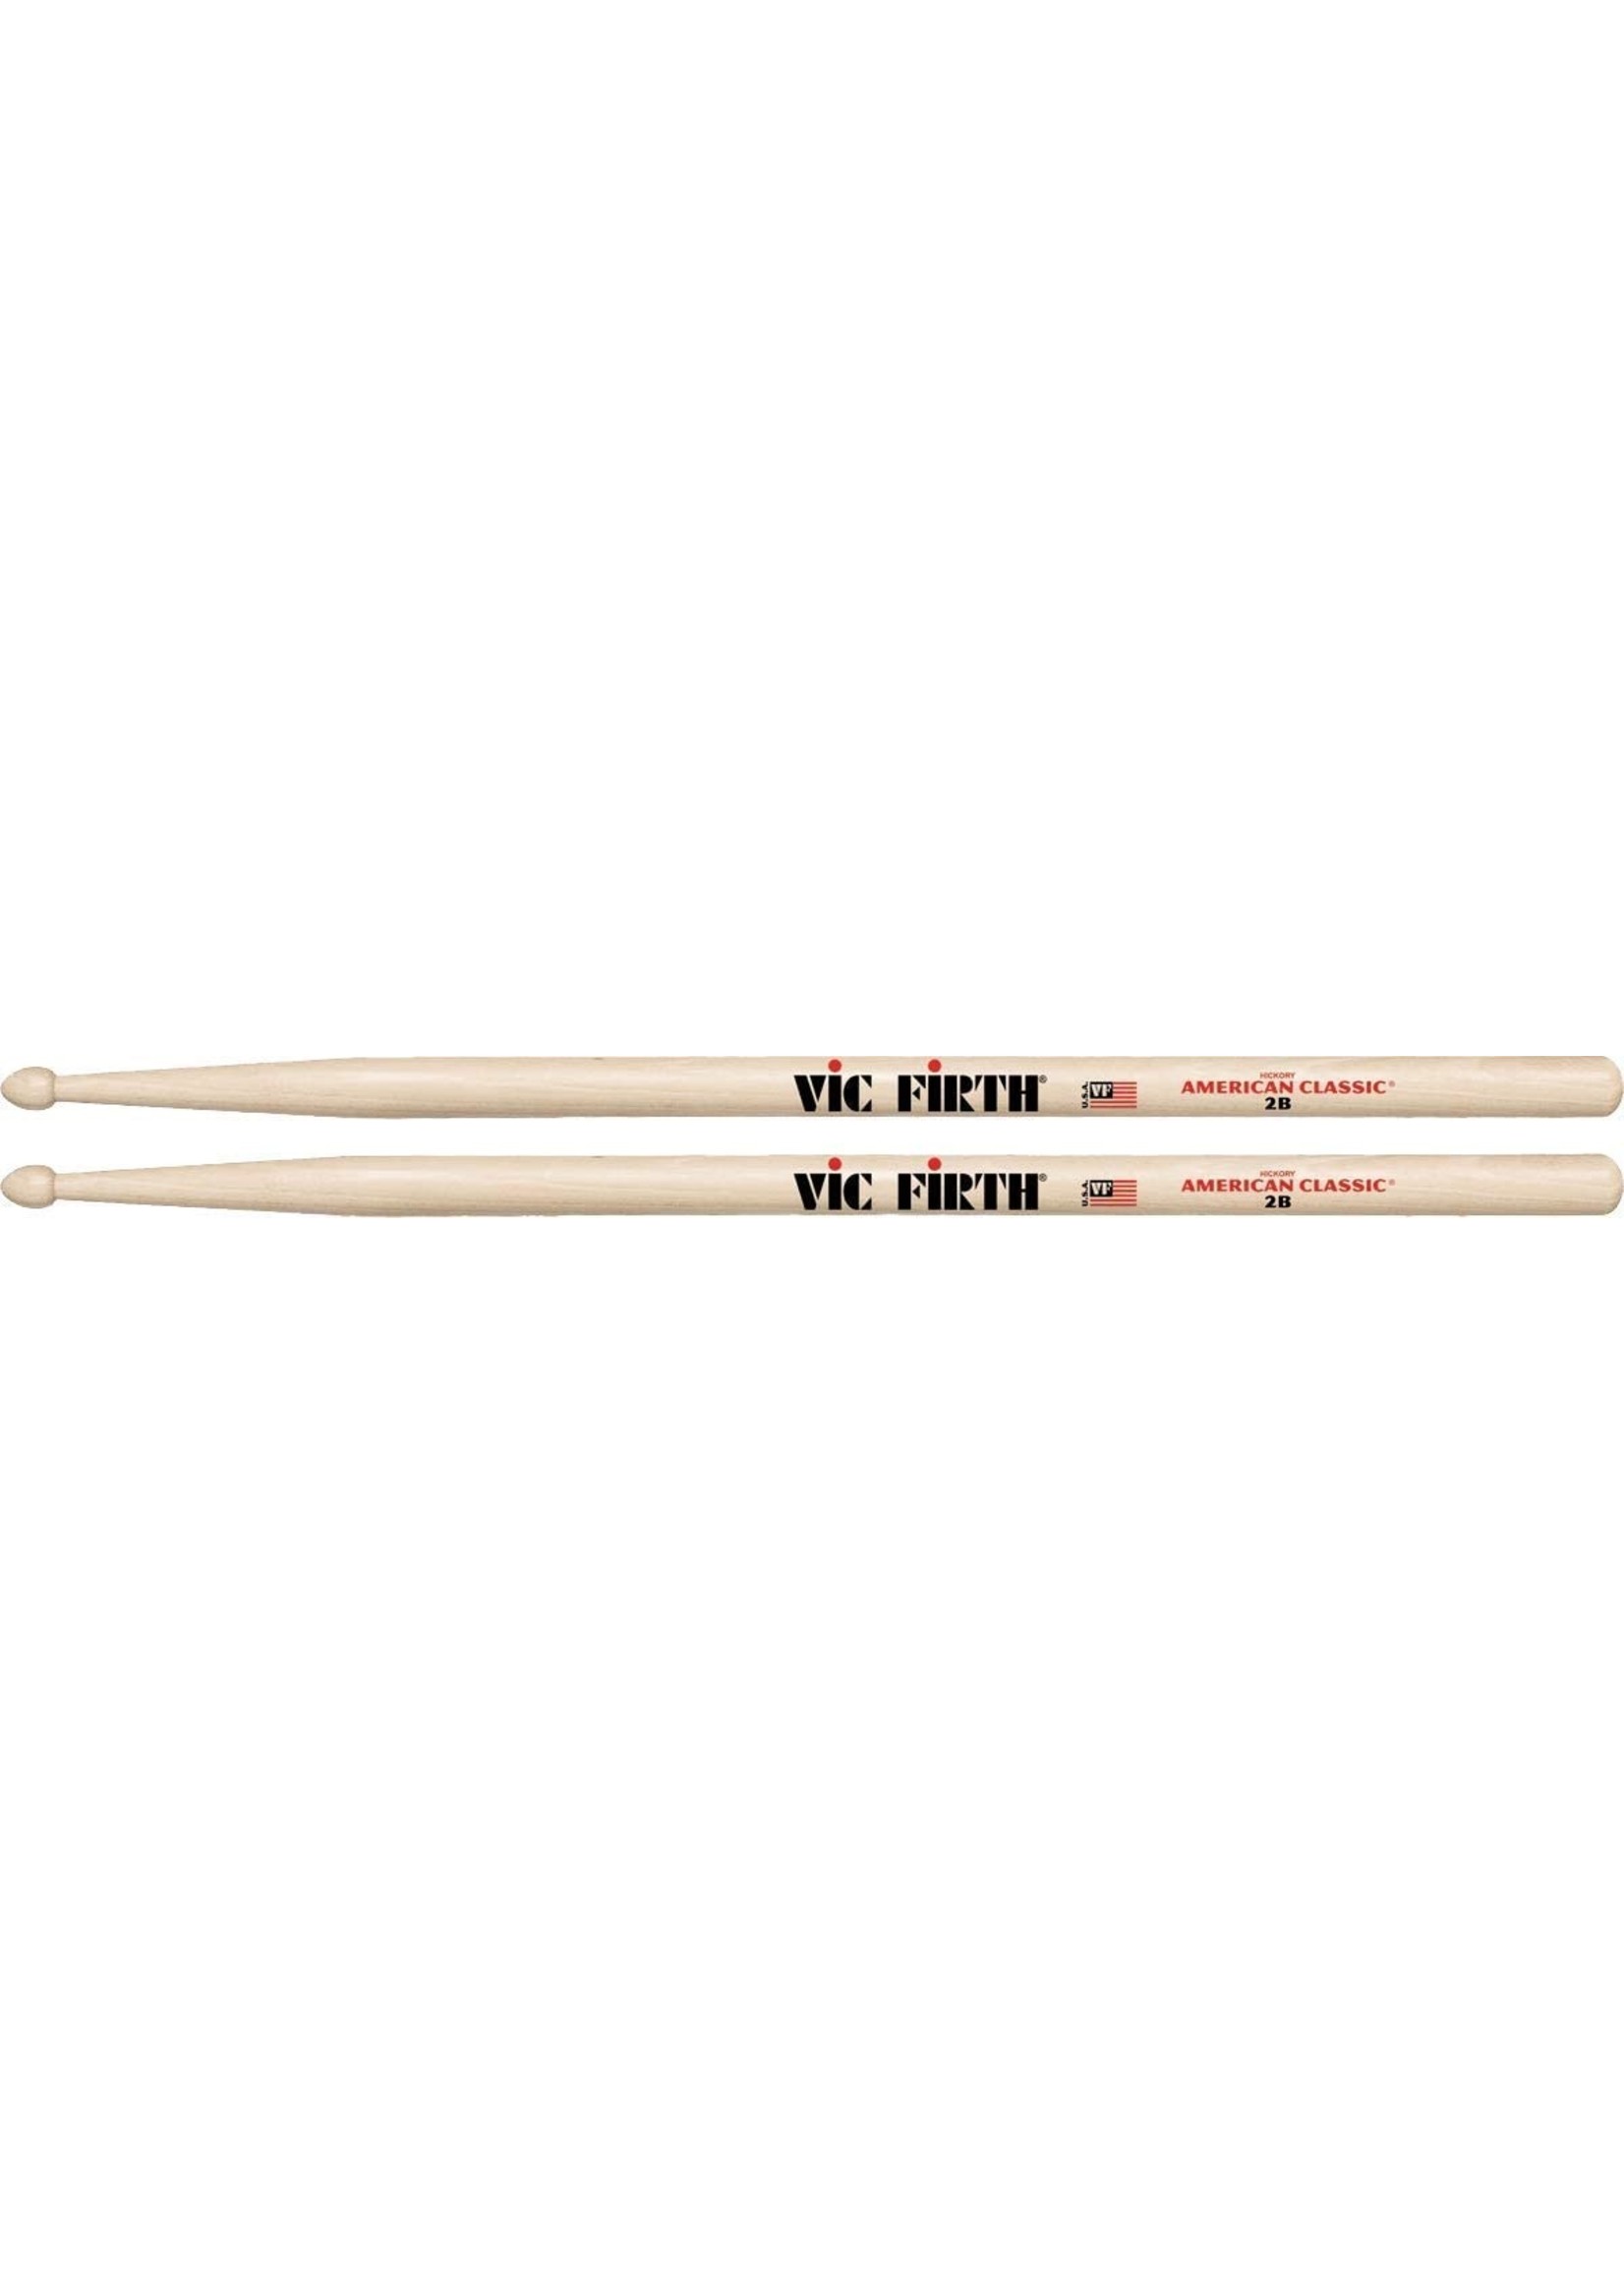 vic firth Vic Firth American Classic 2B Wood Tip Drumsticks